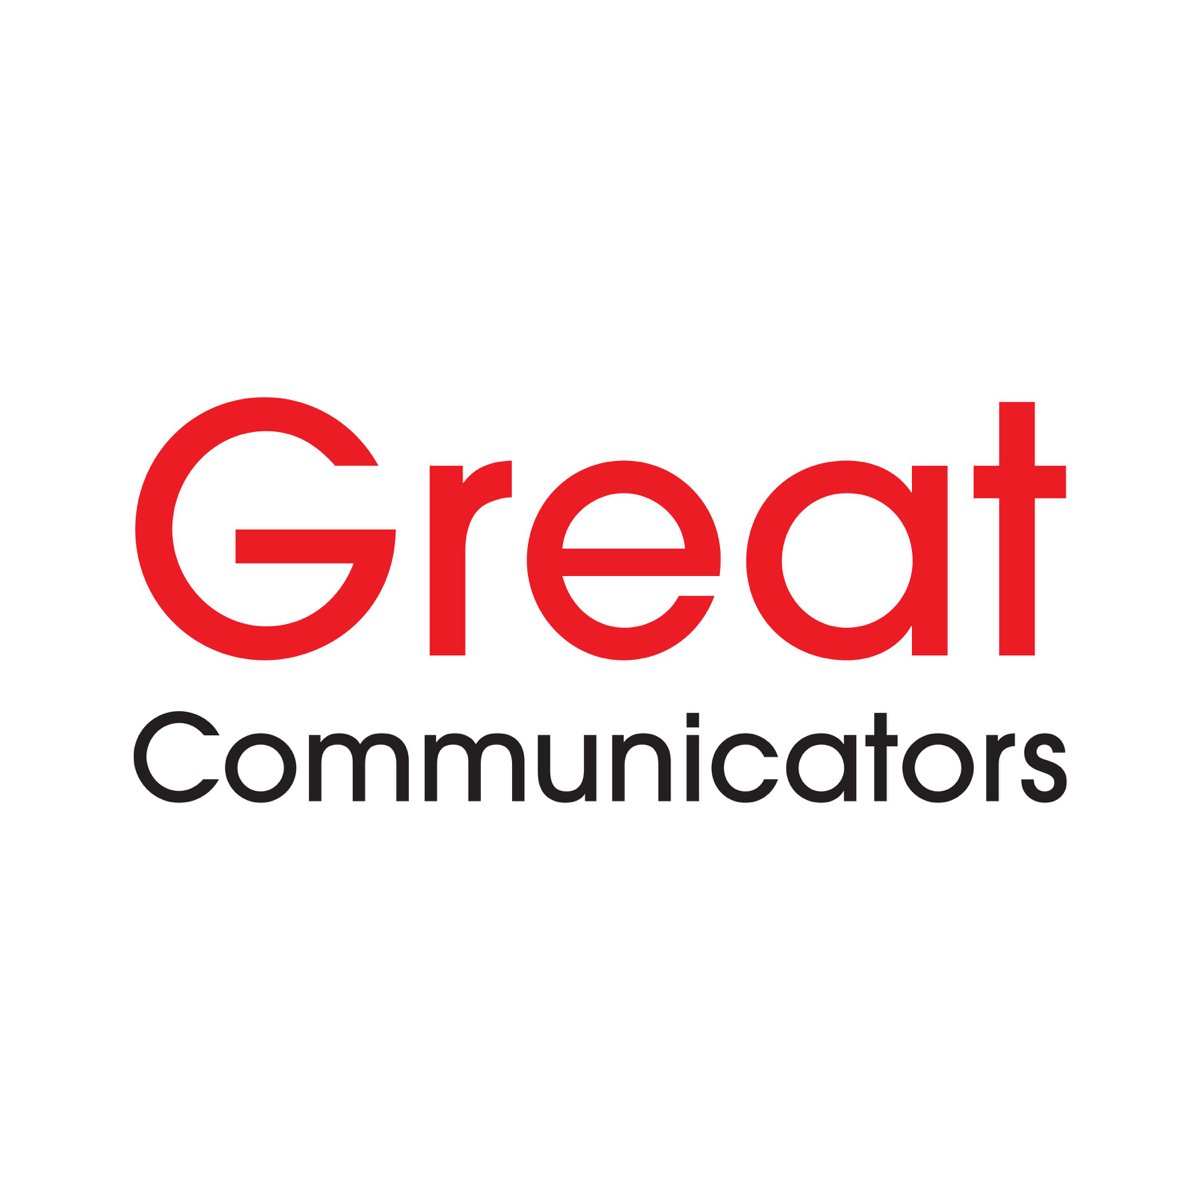 The great communicator. Communicators. Logos of communications Groups.